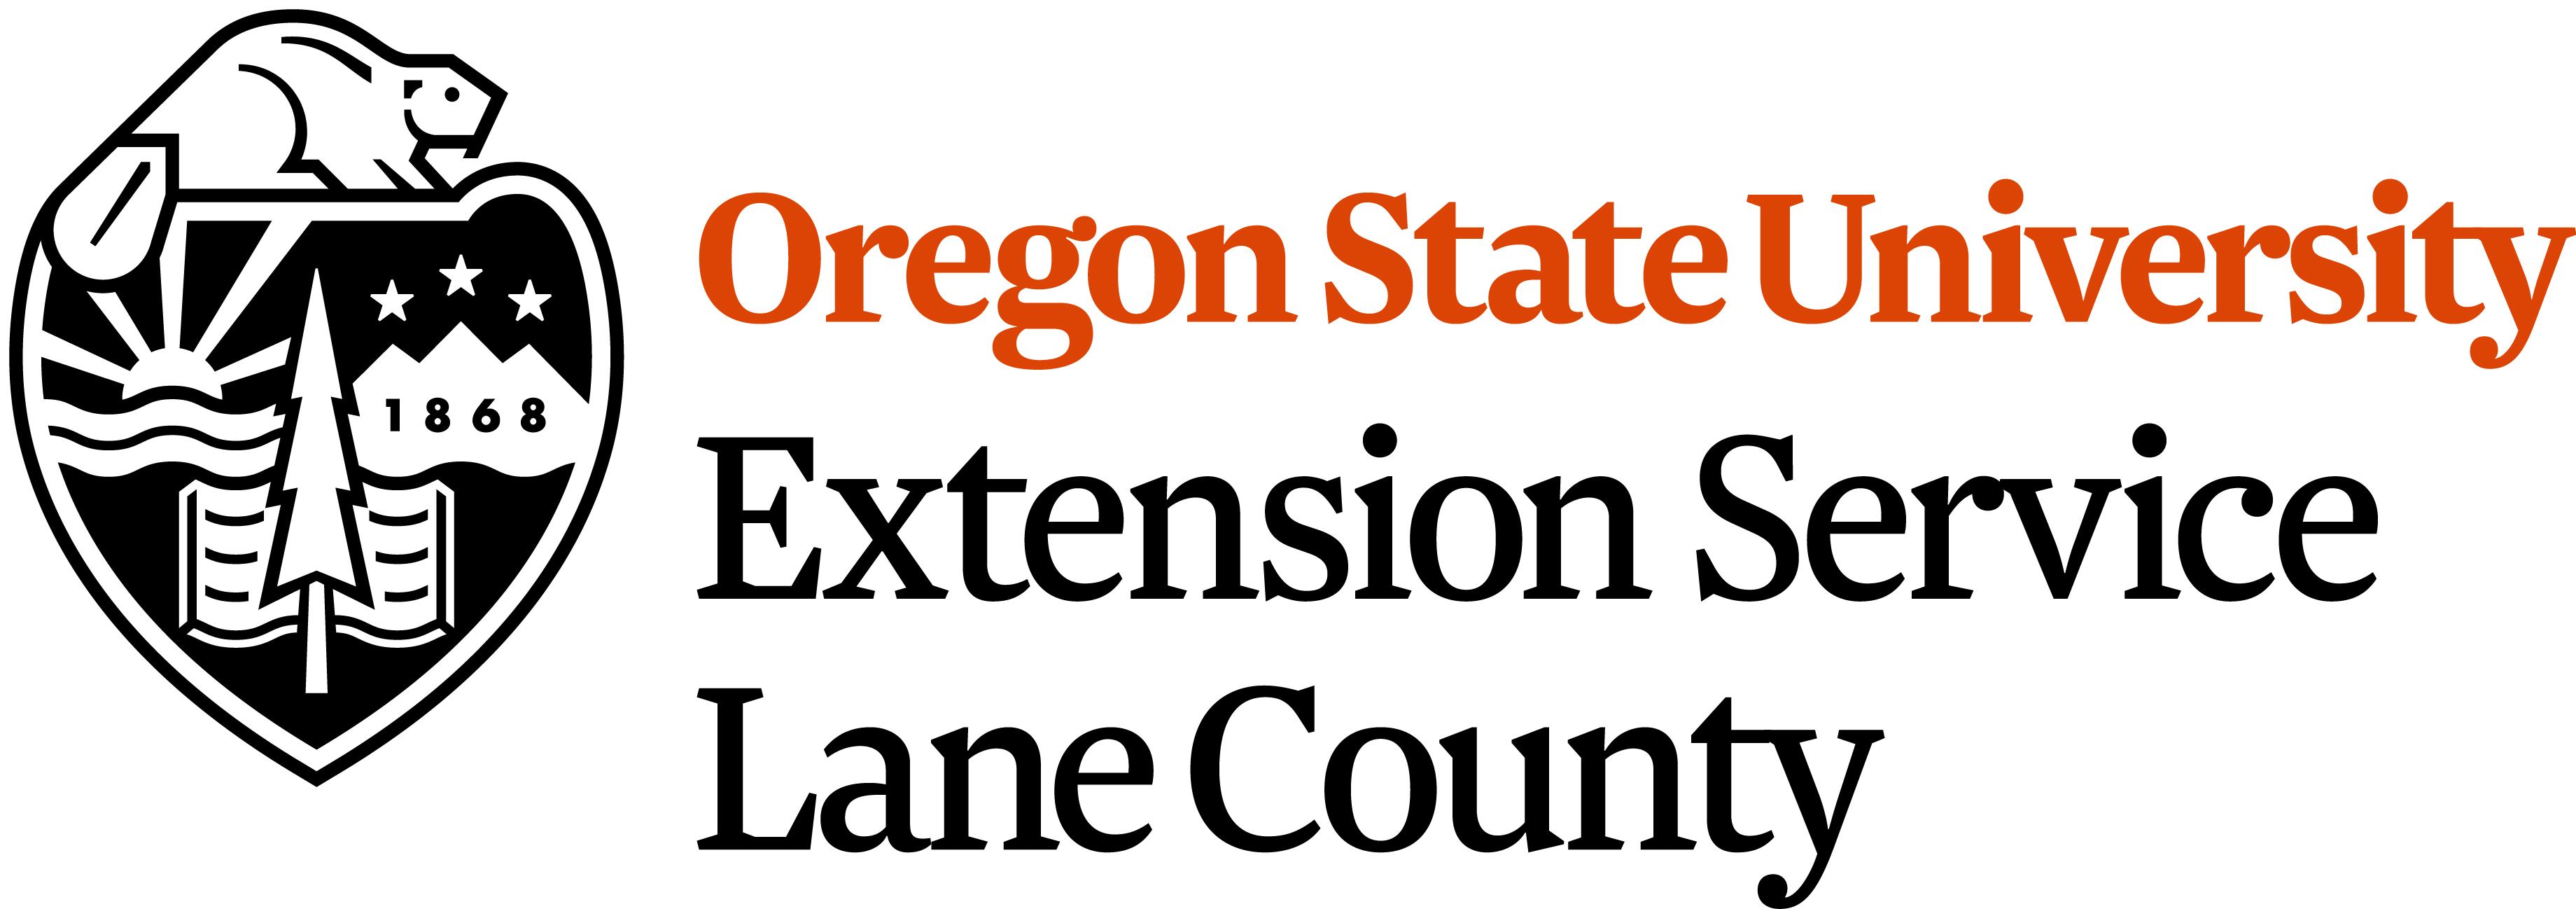 OSU Extension Service - Lane County